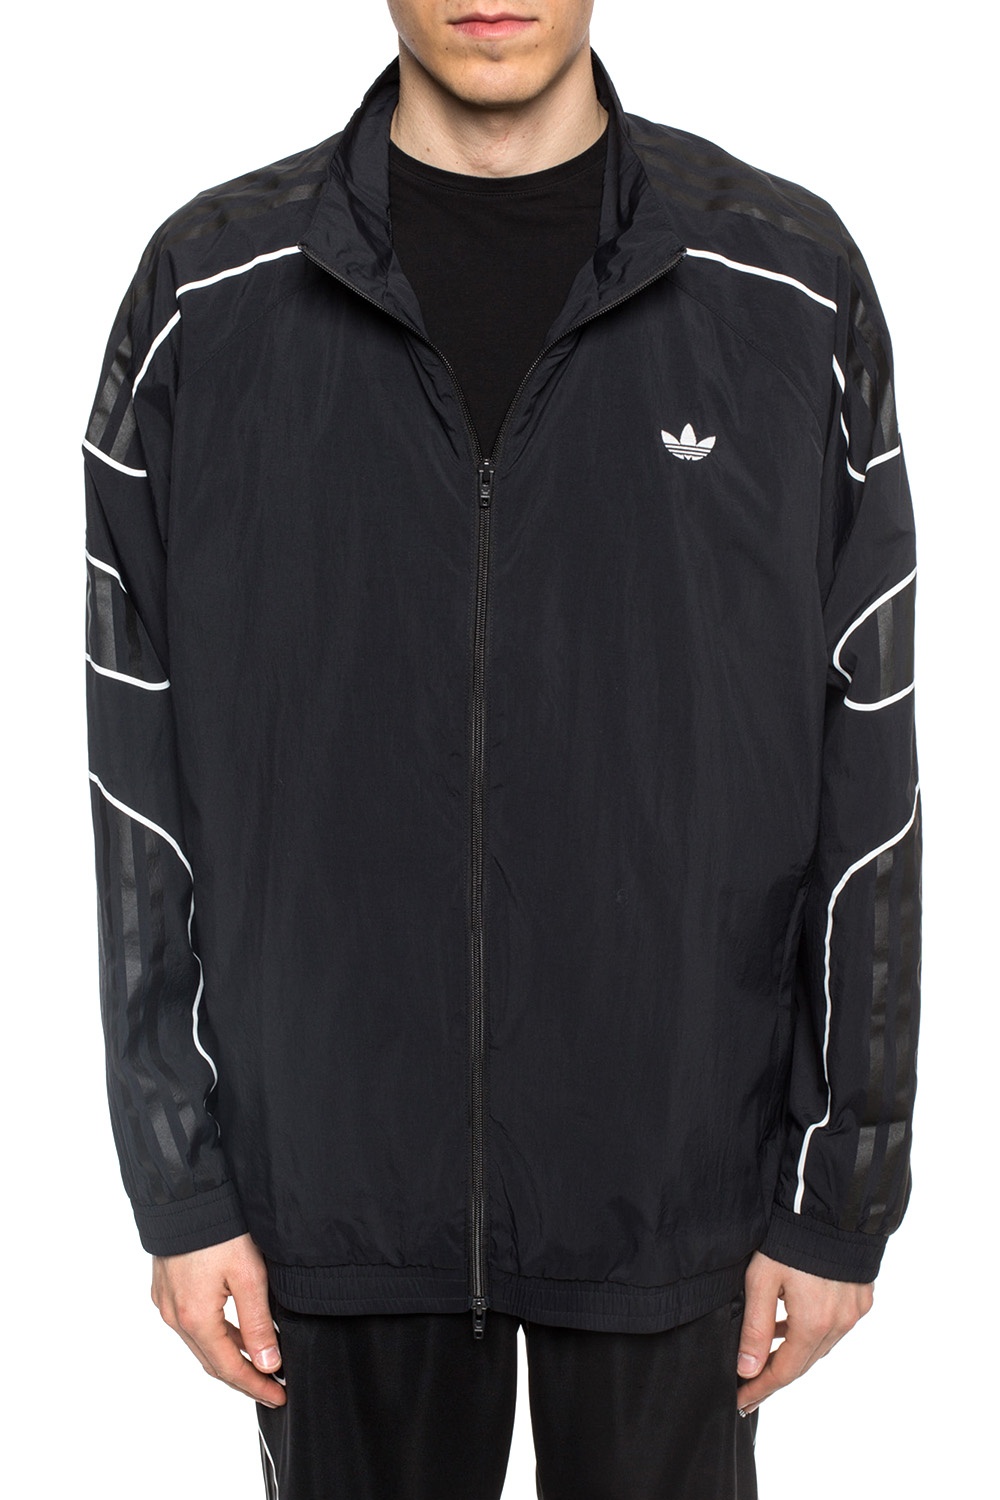 ADIDAS Originals collar rain jacket | Clothing | Vitkac